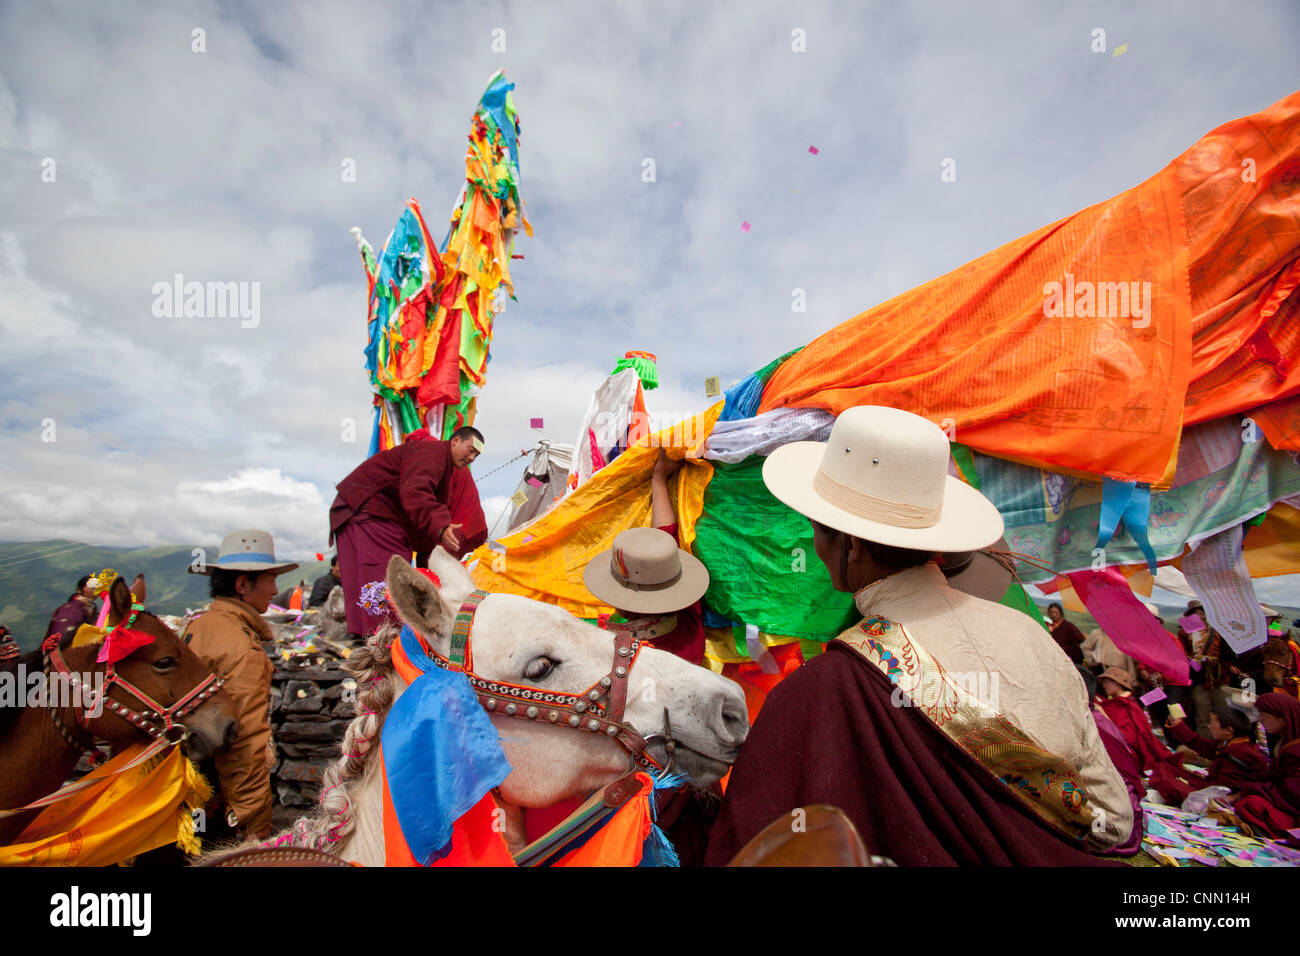 Nomads ceremony horse festival secret mountain Tagong area western China Tibet Asia Stock Photo